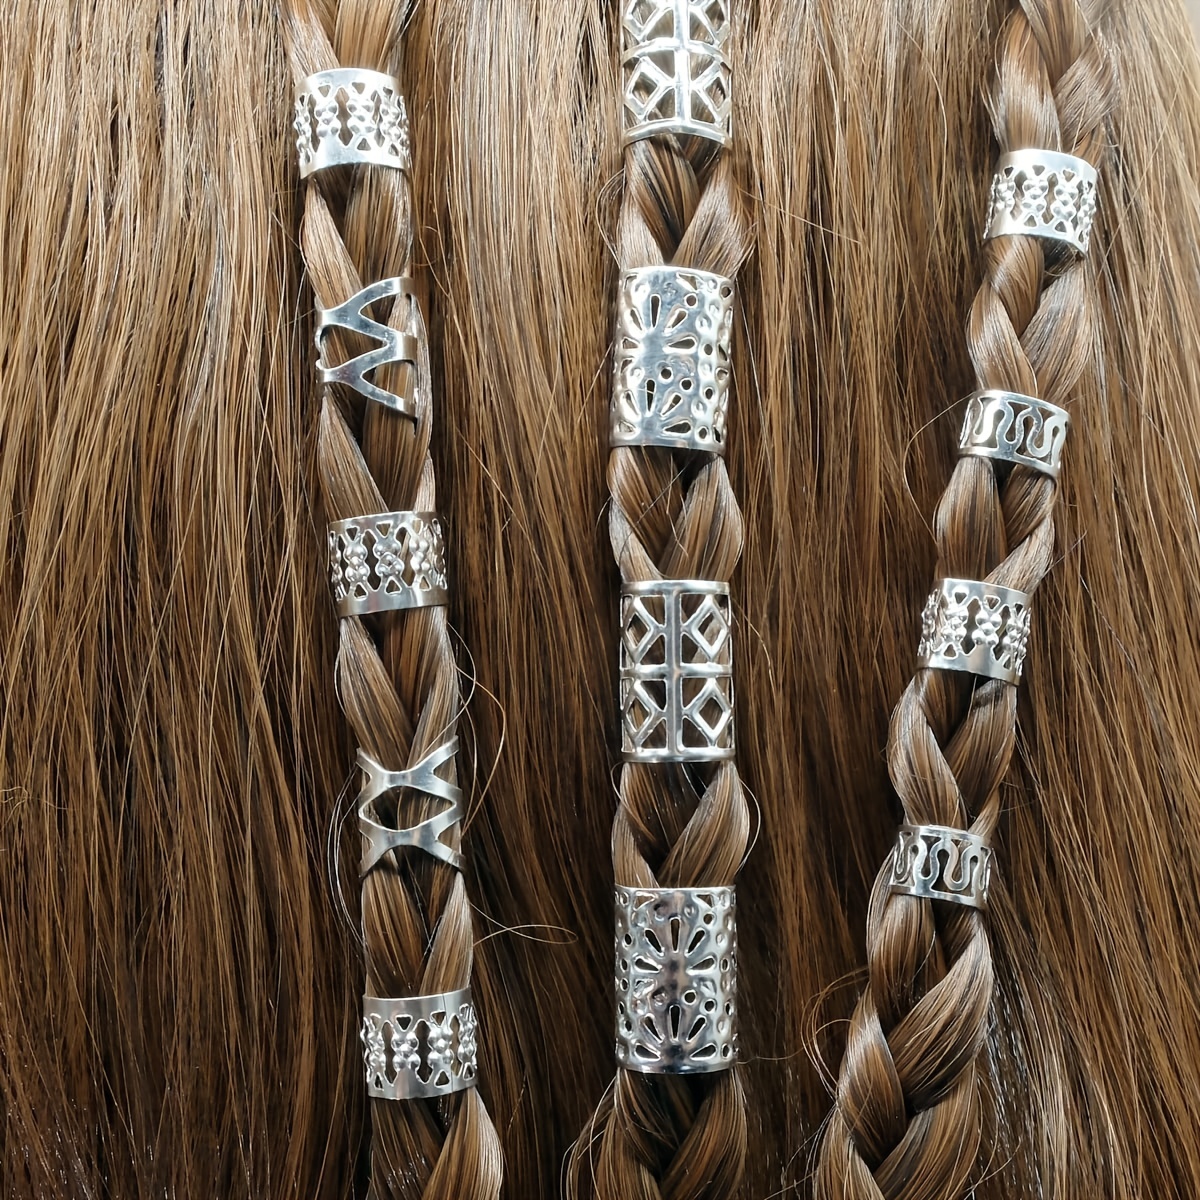 5 Pcs Metal Loc Beads Set, Dreadlock Hair Accessories, Hair Rings